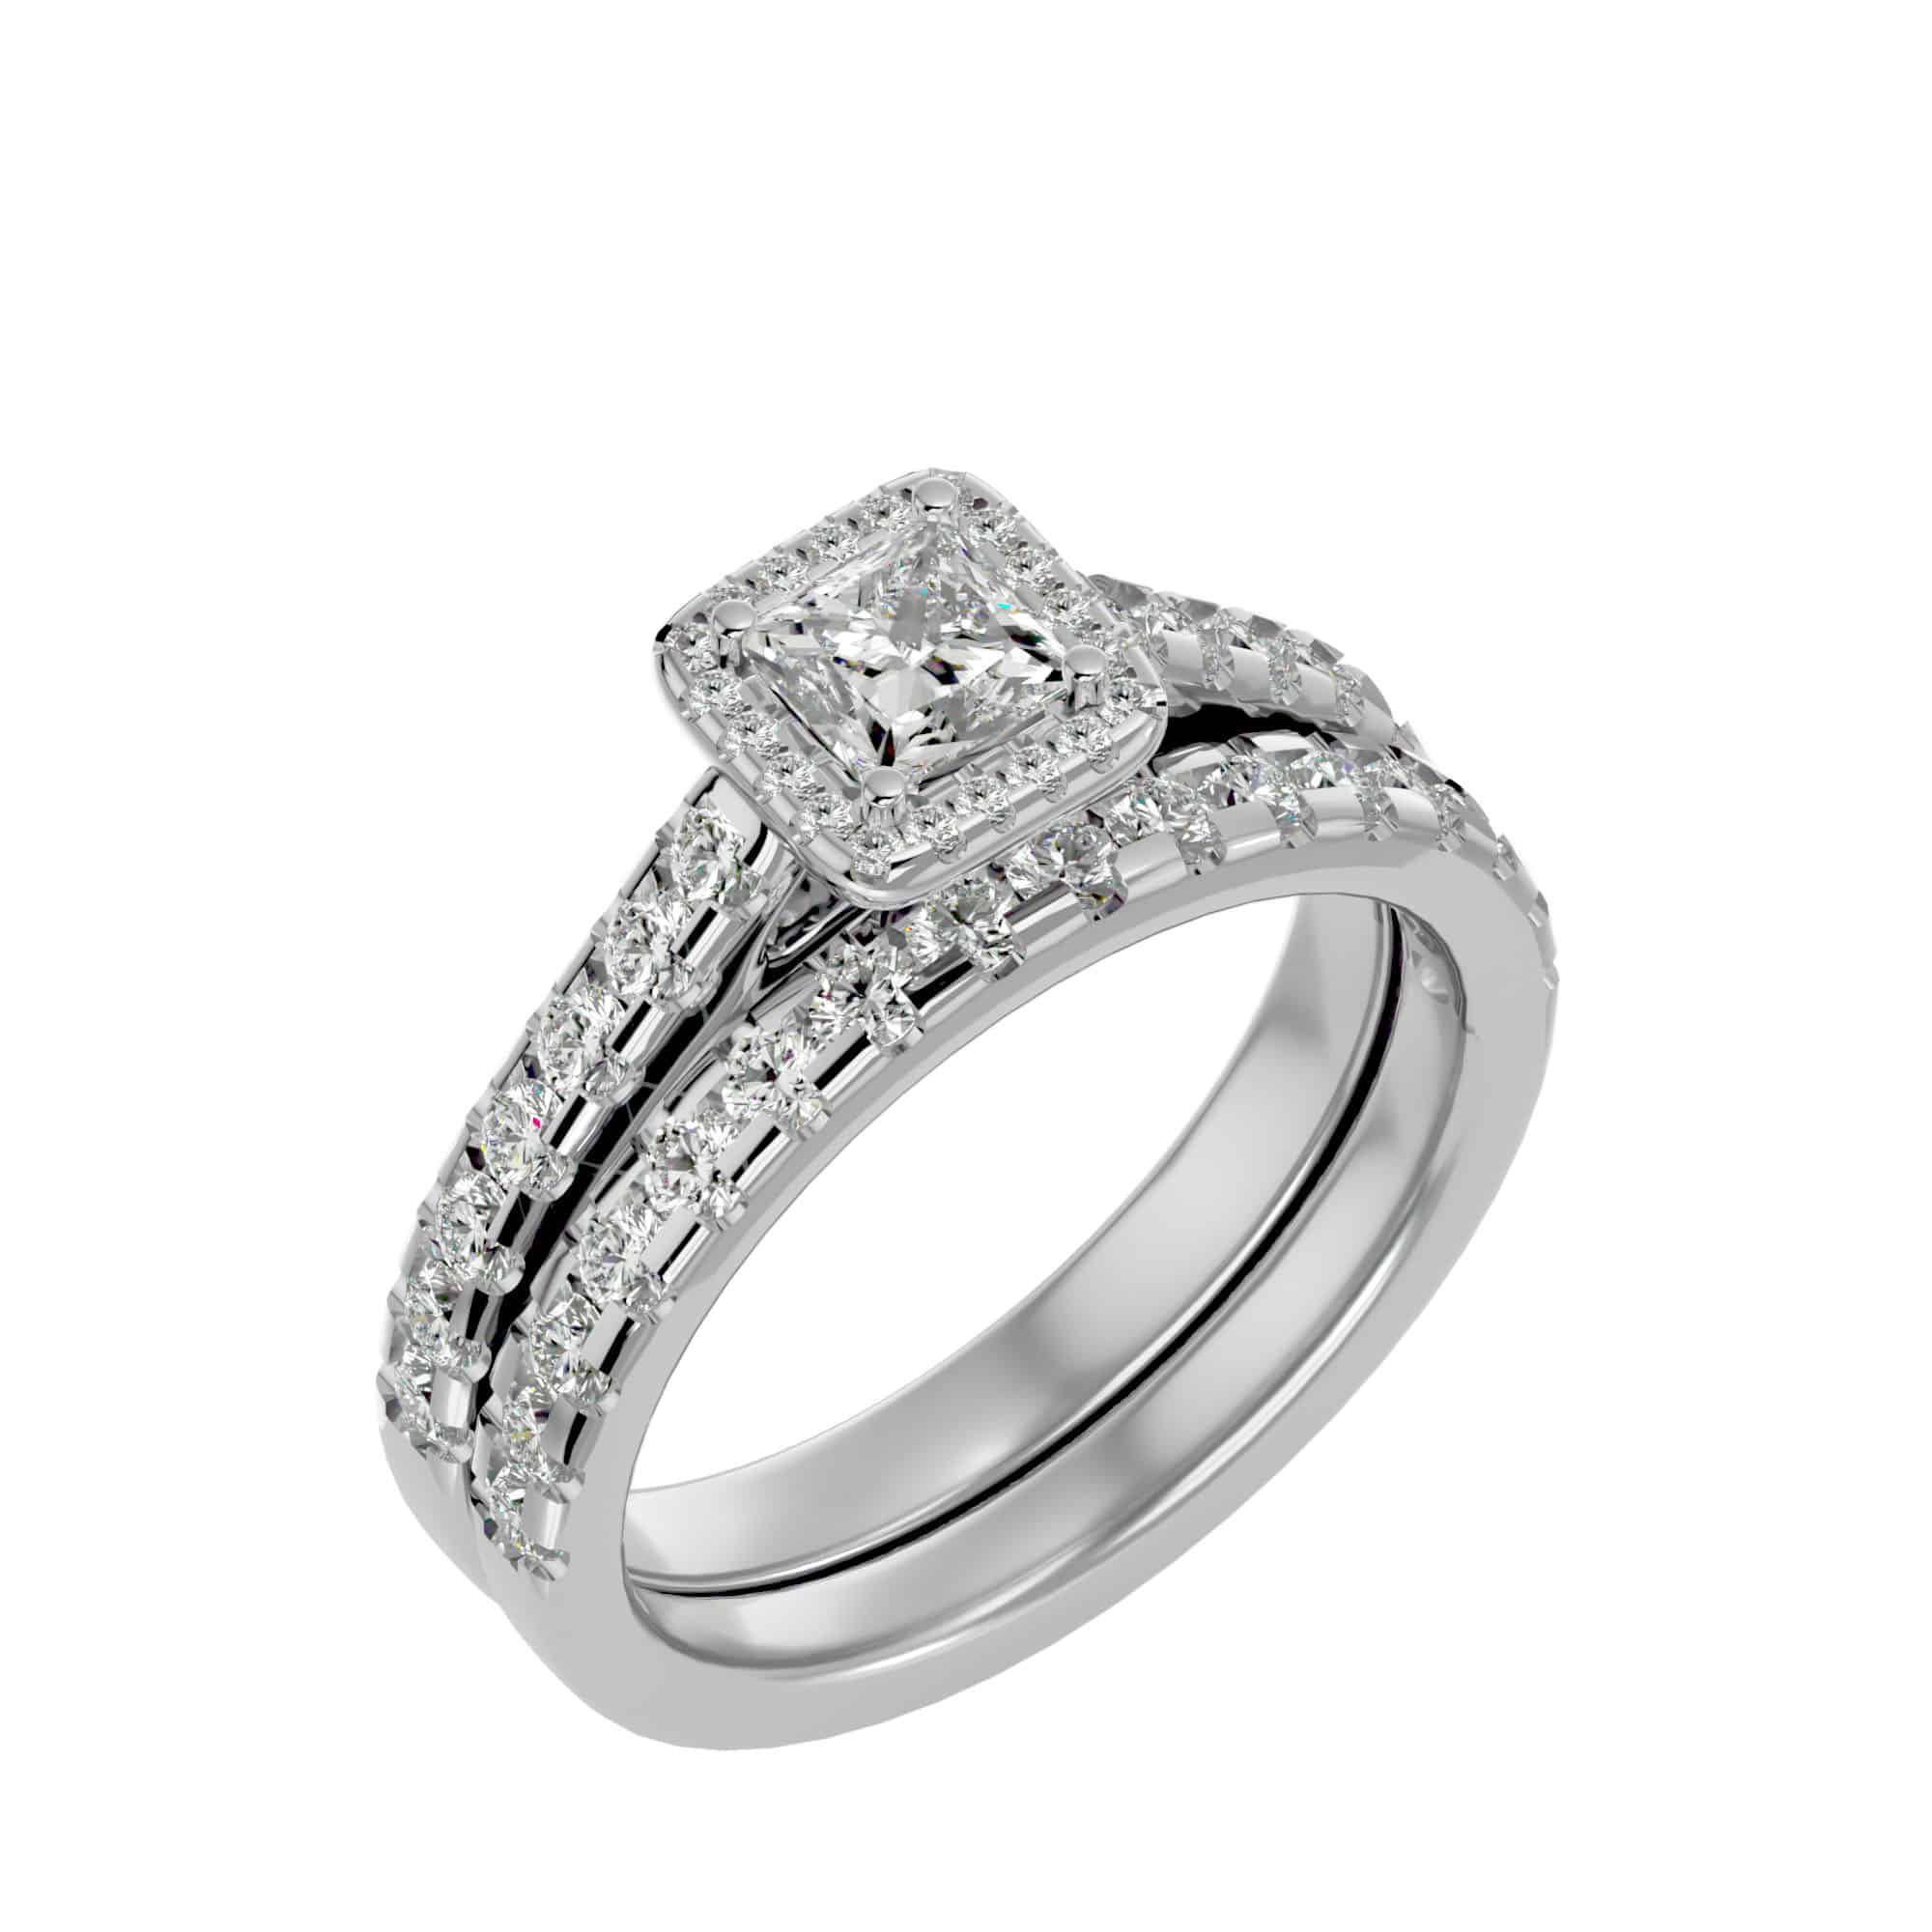 Princess Cut Halo Diamond Ring With Matching Wedding Band